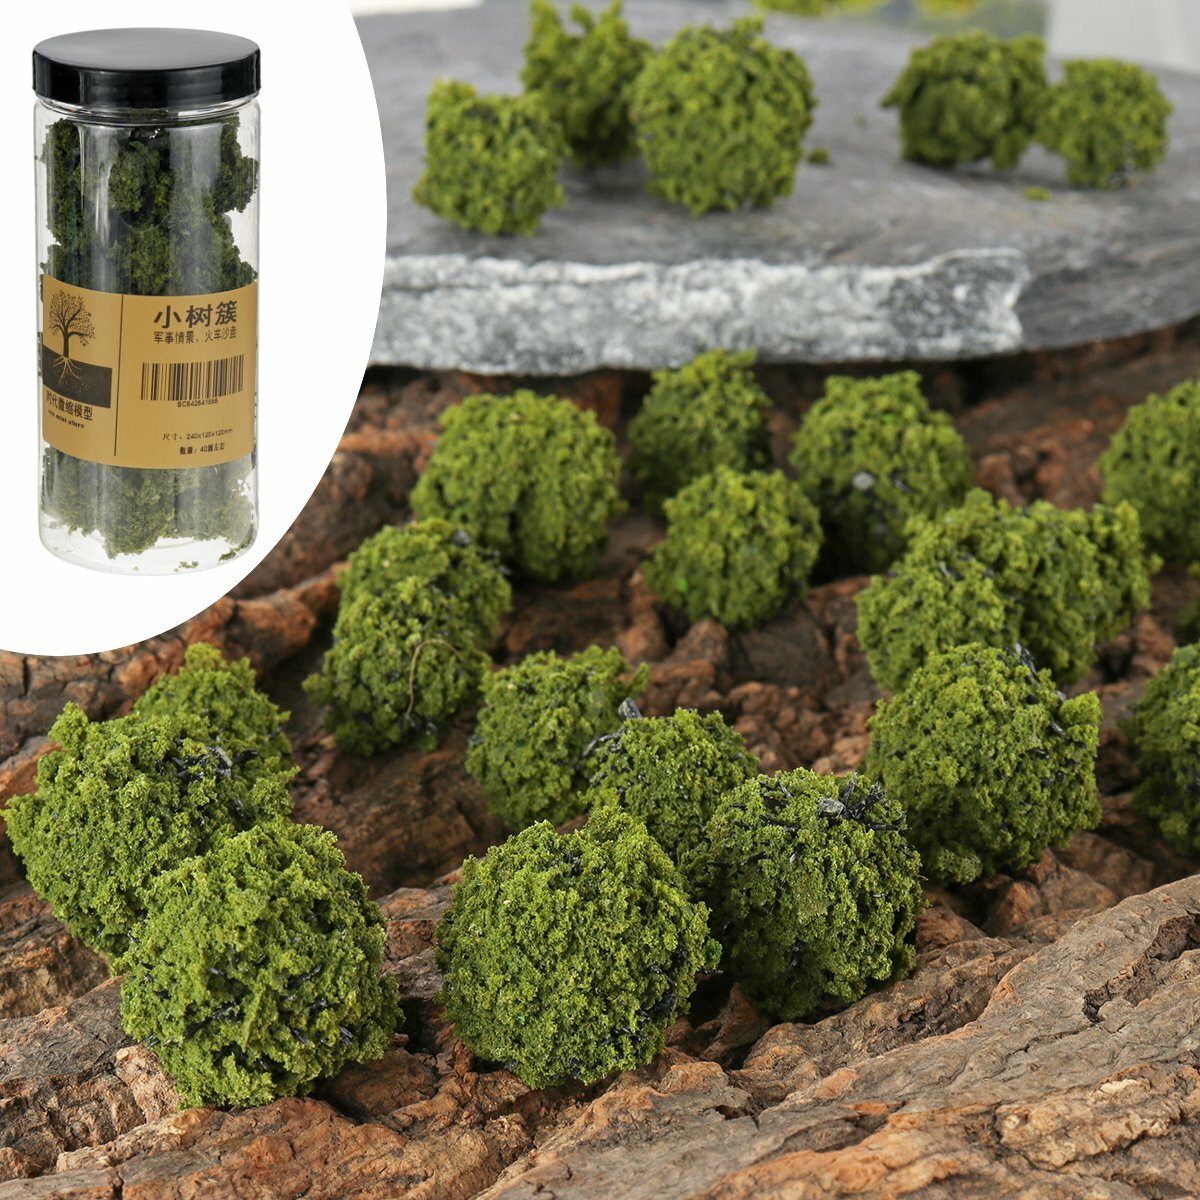 

Model Scale Tree Cluster Garden Railway Scenery Layout Miniature Landscape DIY Decorations